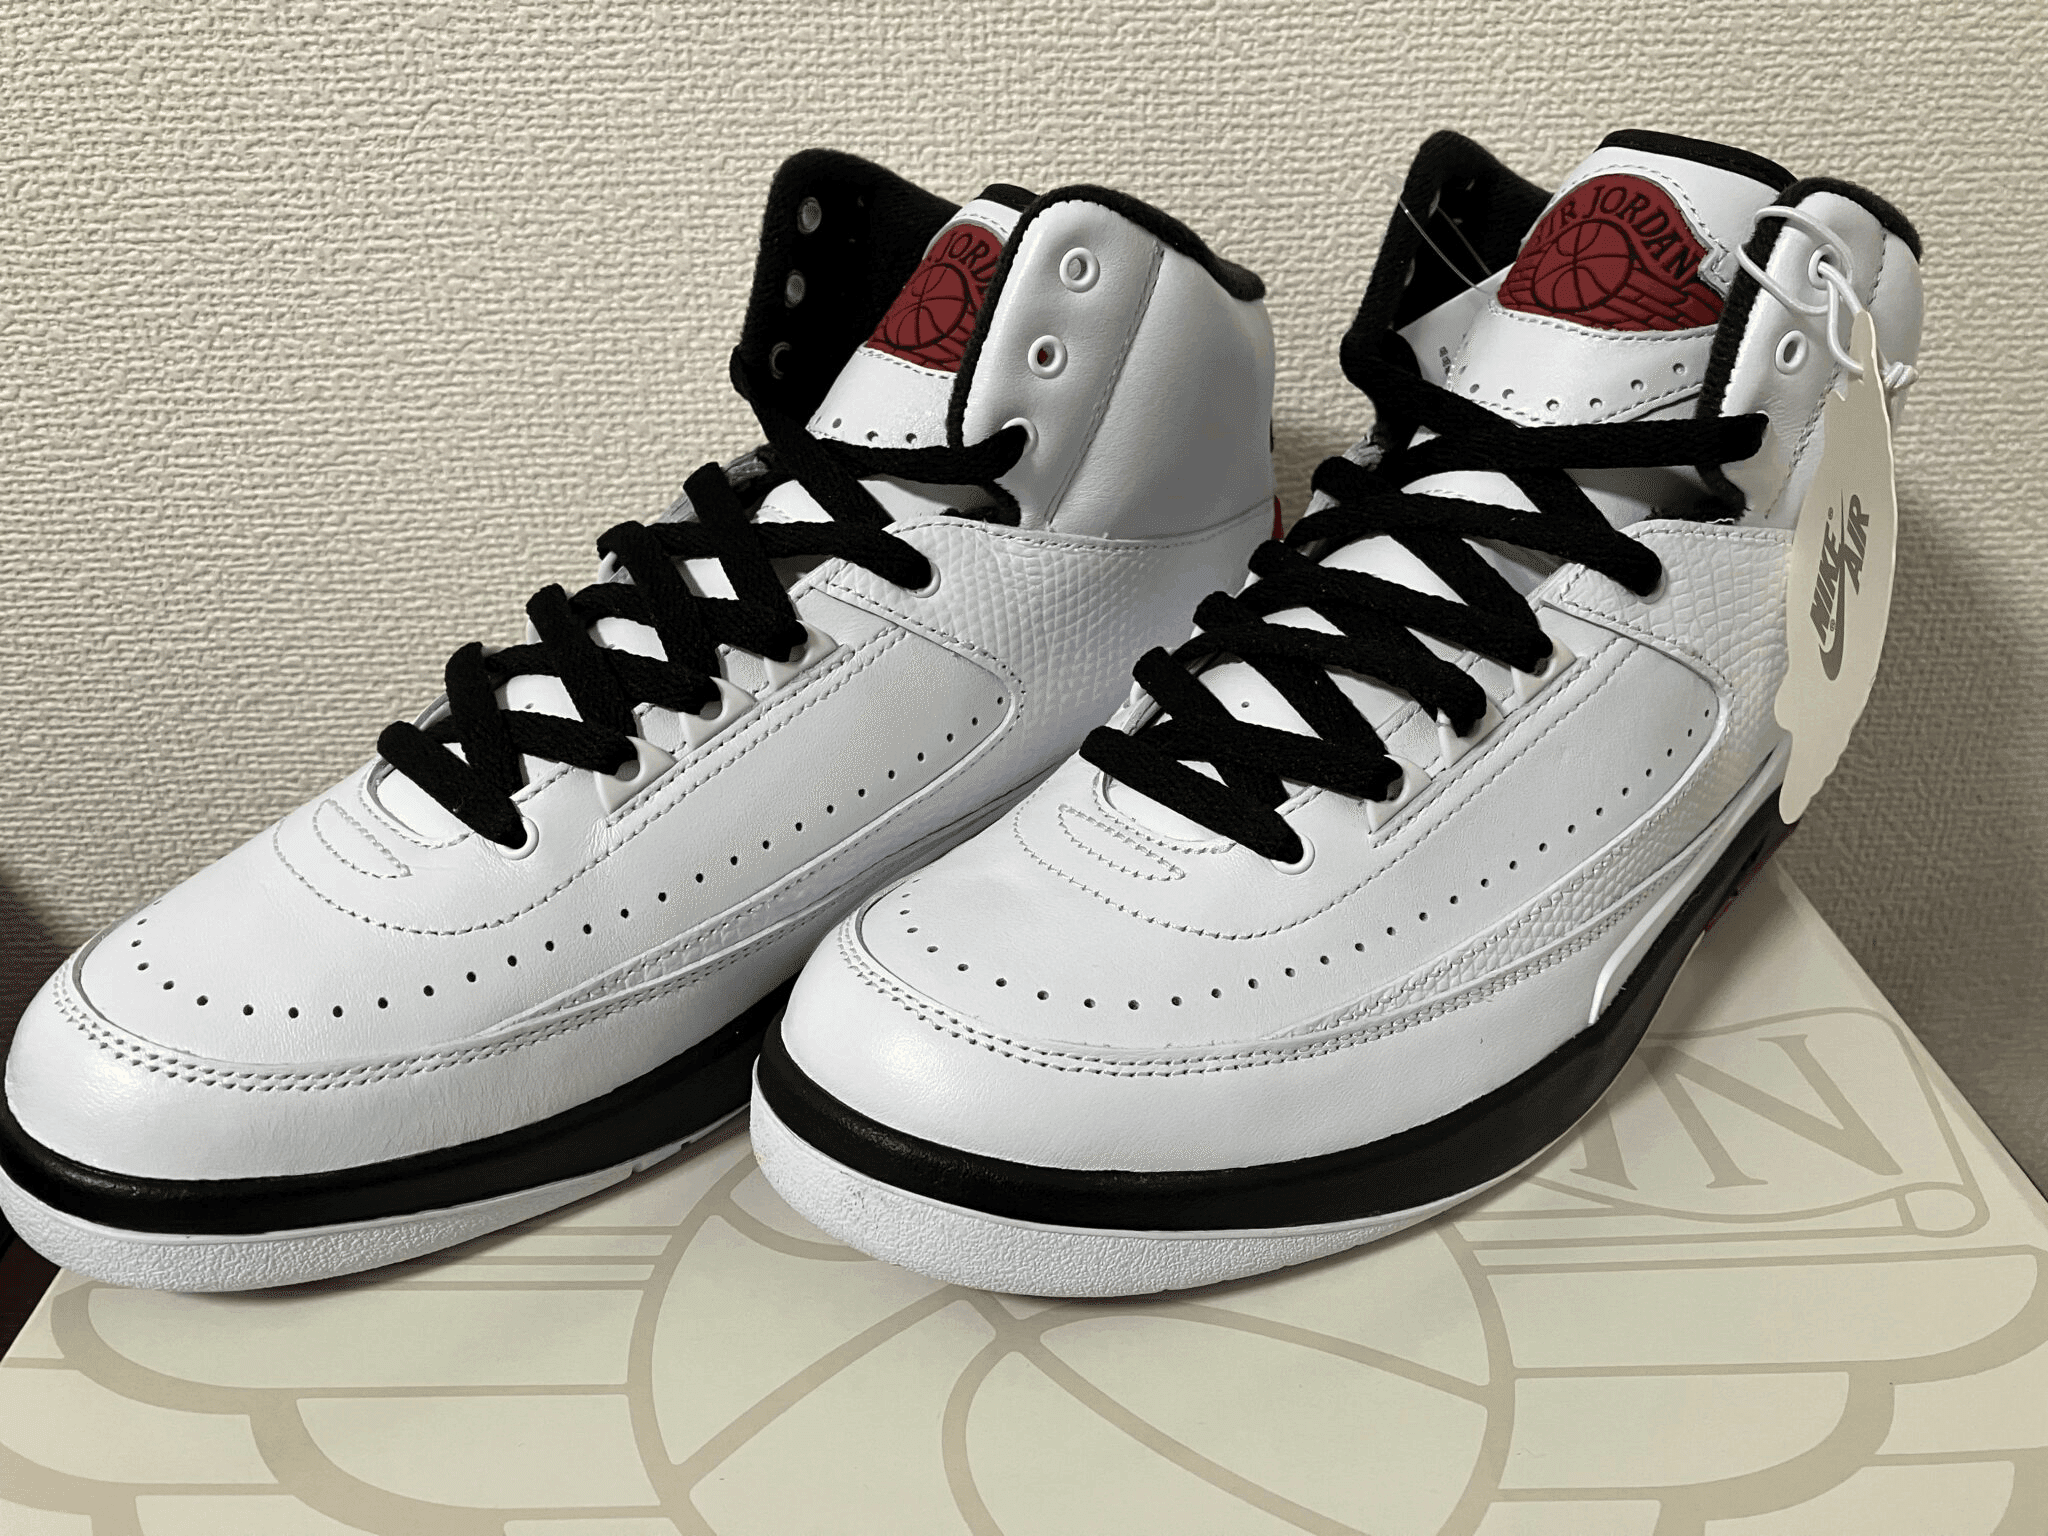 Nike】Air Jordan 2 OG Chicago広瀬すずさん着用モデル - スニーカー